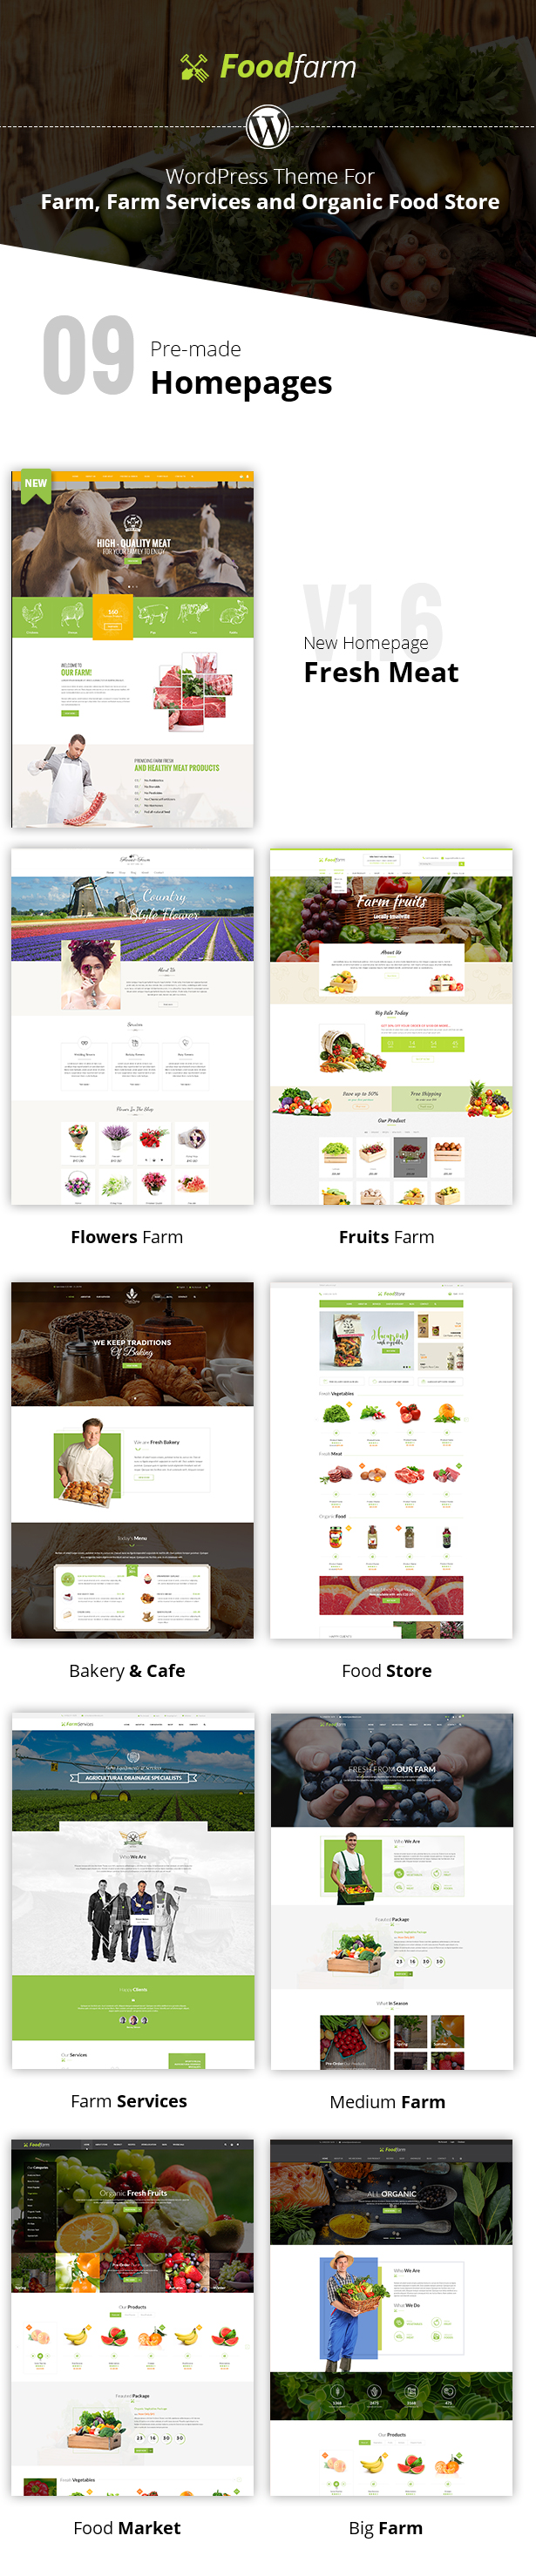 FoodFarm – WordPress Theme for Farm, Farm Services and Organic Food Store